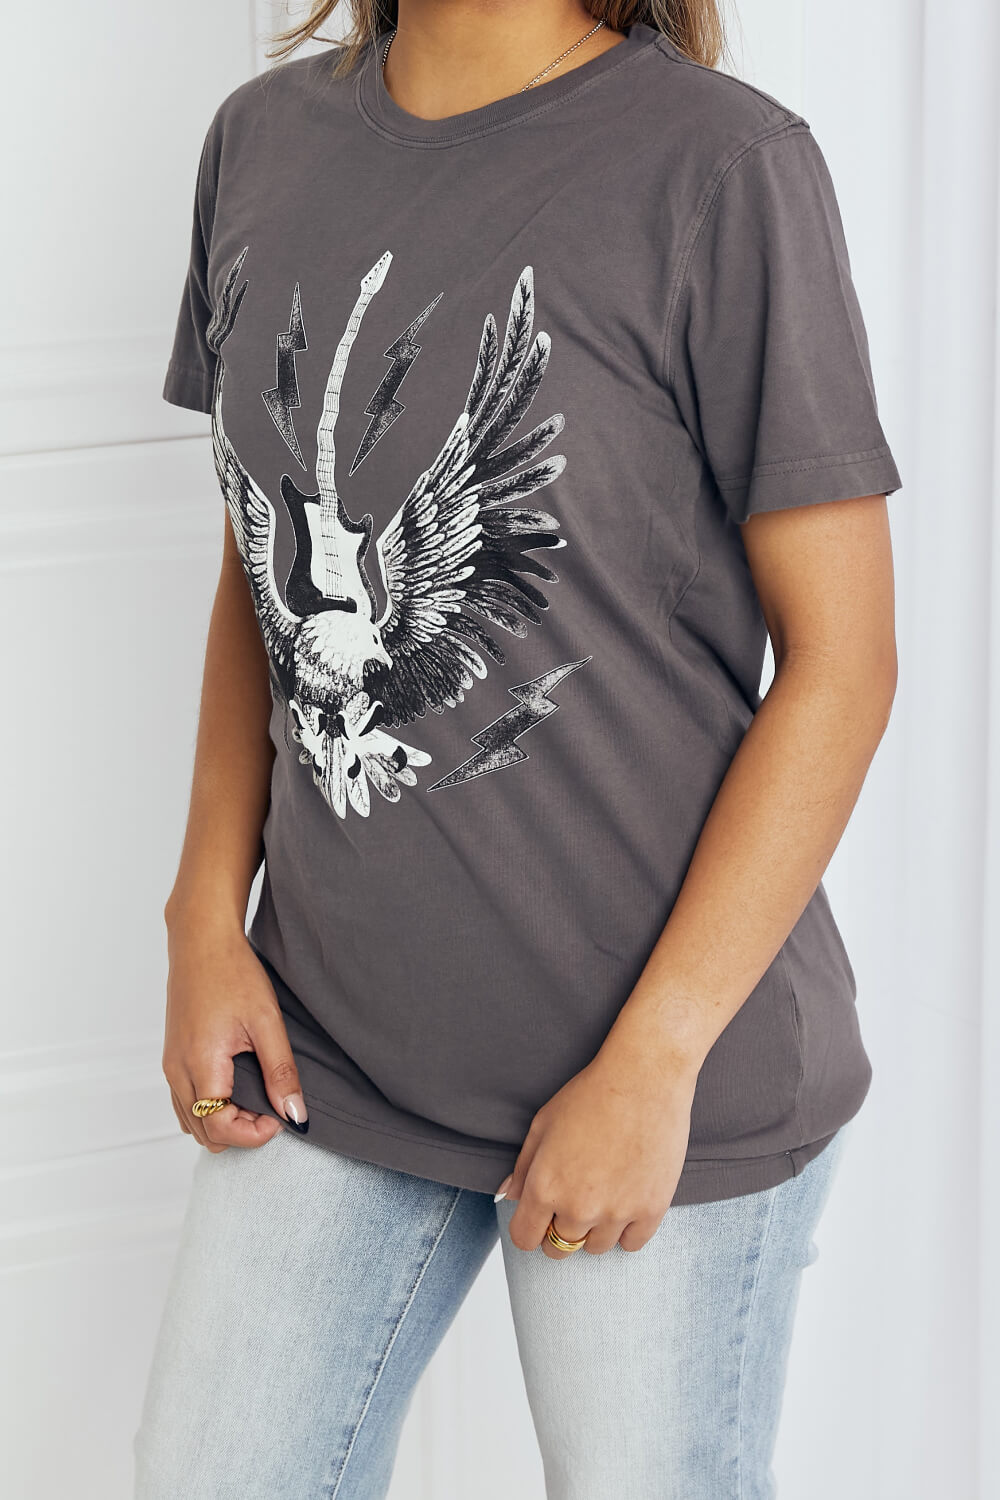 Women's mineB Full Size Eagle Graphic Tee Shirt